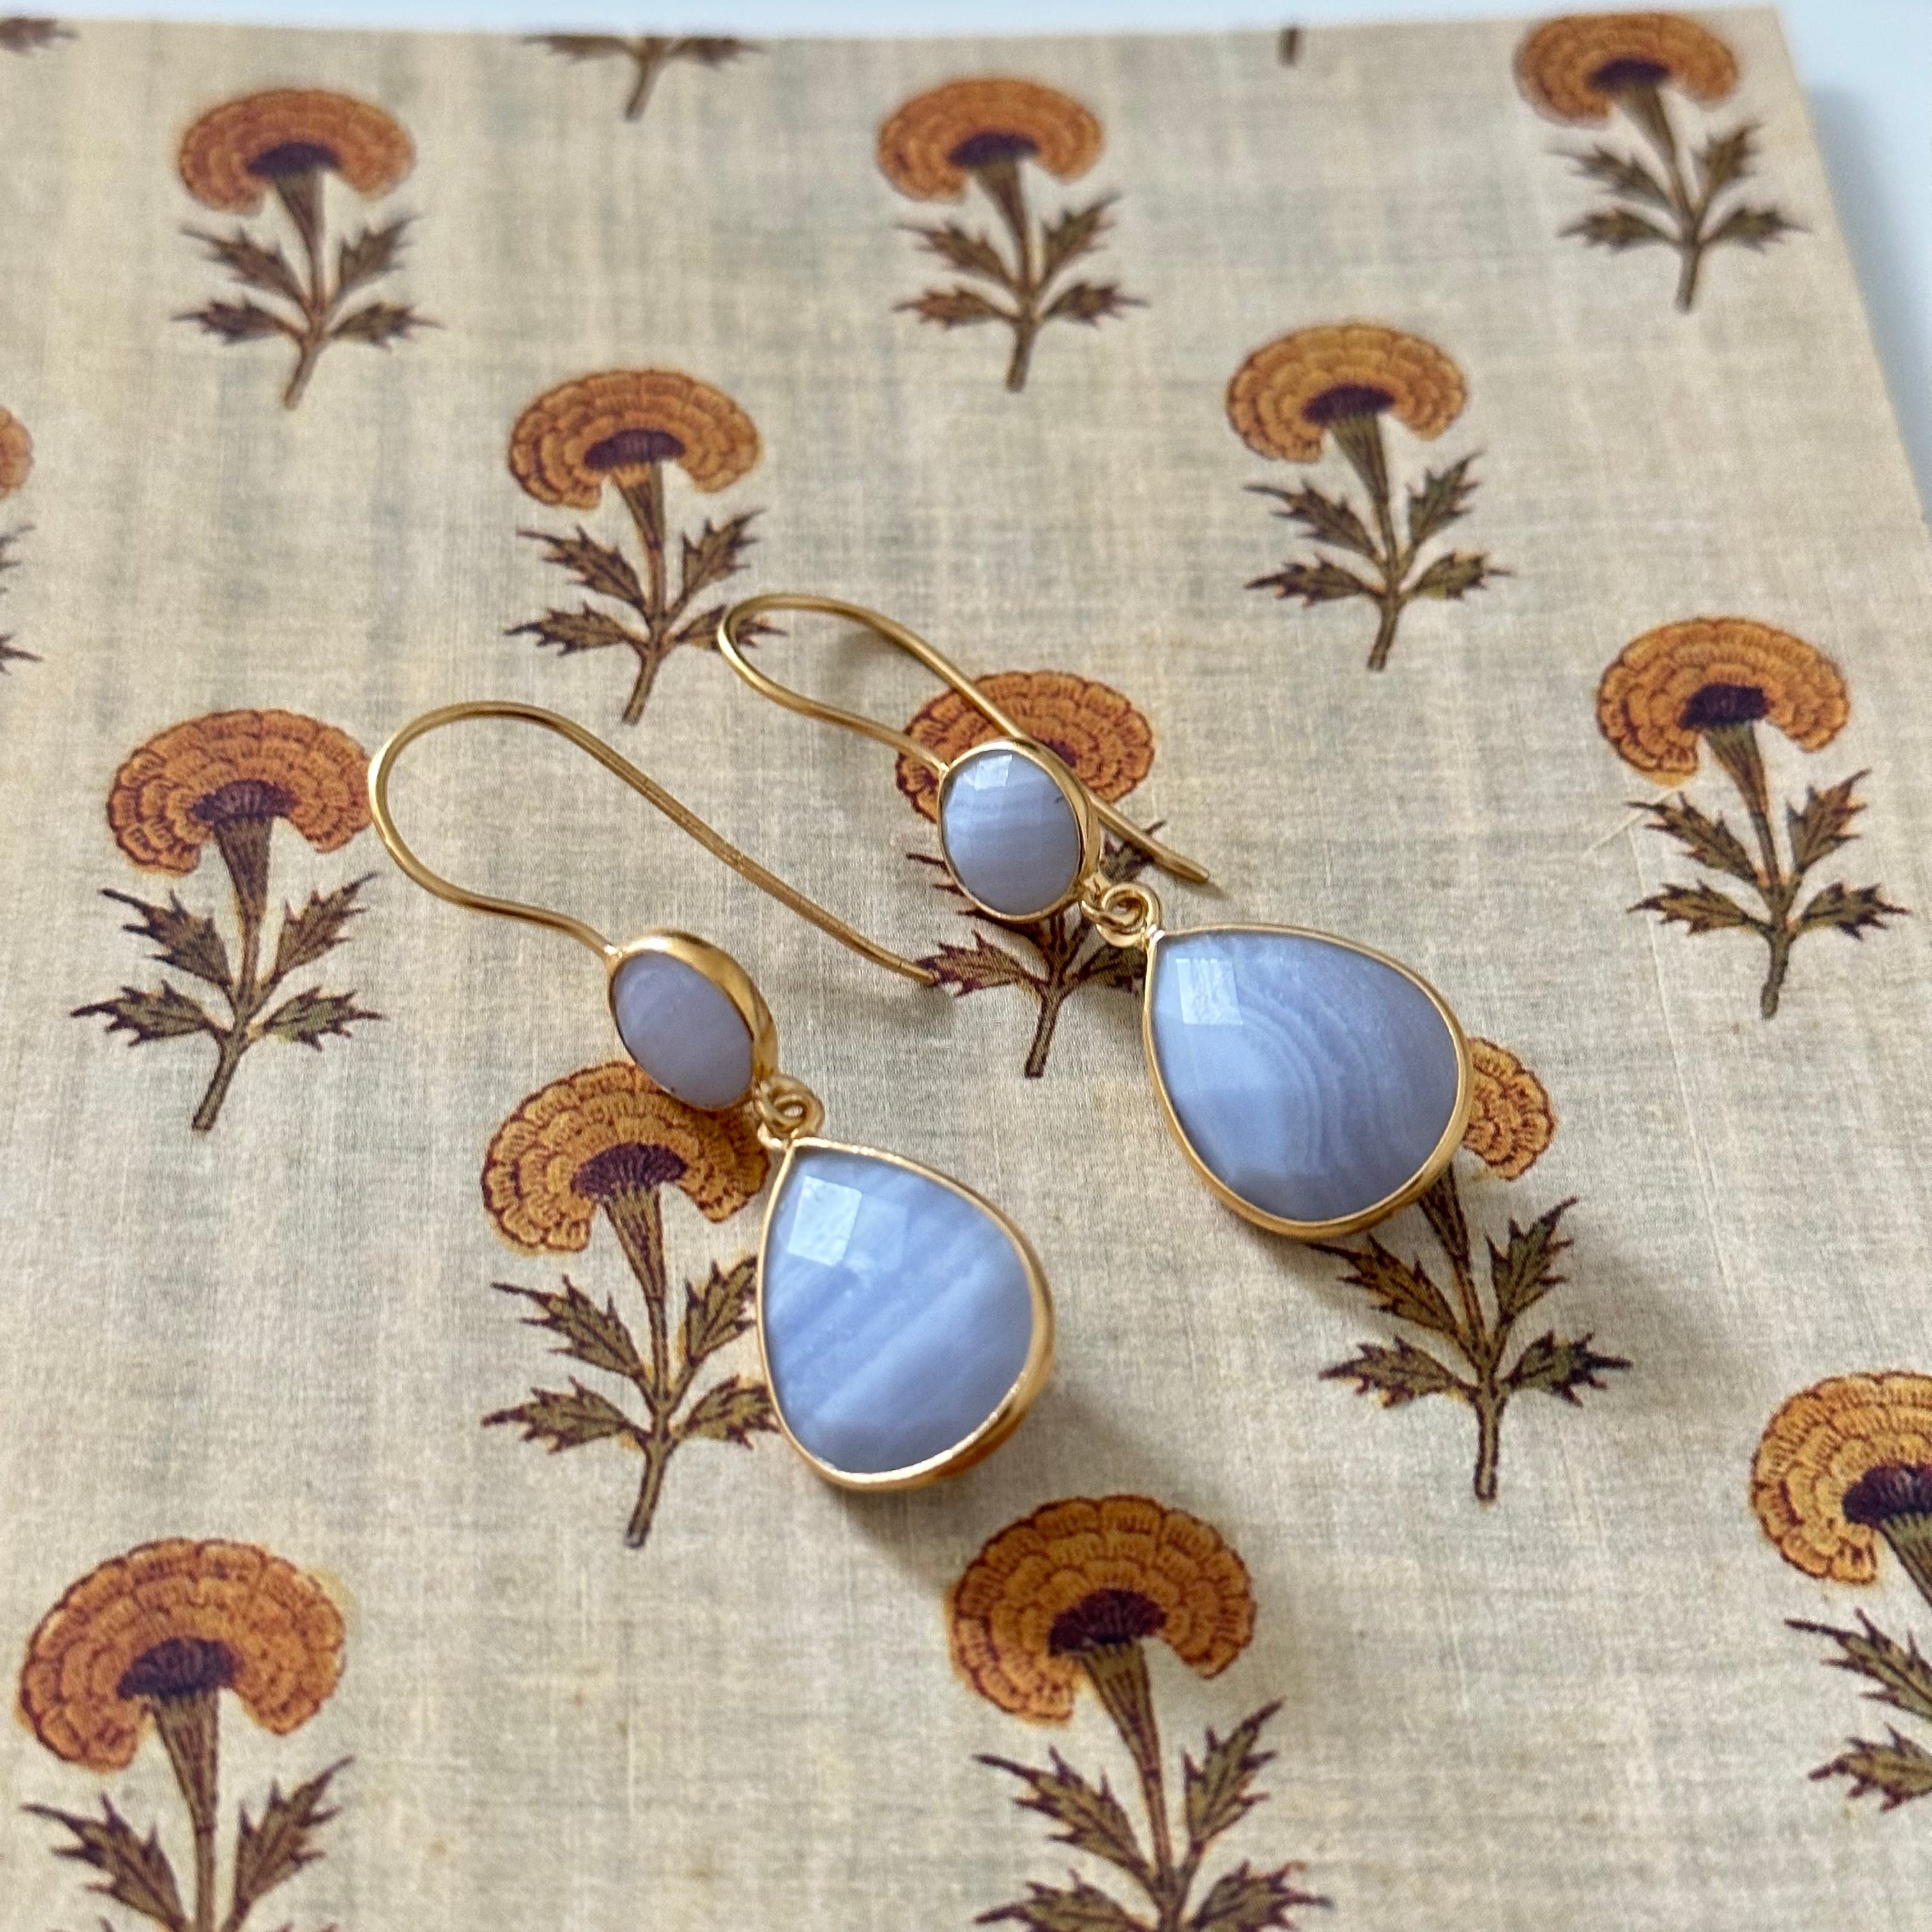 Blue Laced Agate Gemstone Two Stone Earrings in Gold Plated Sterling Silver - Teardrop